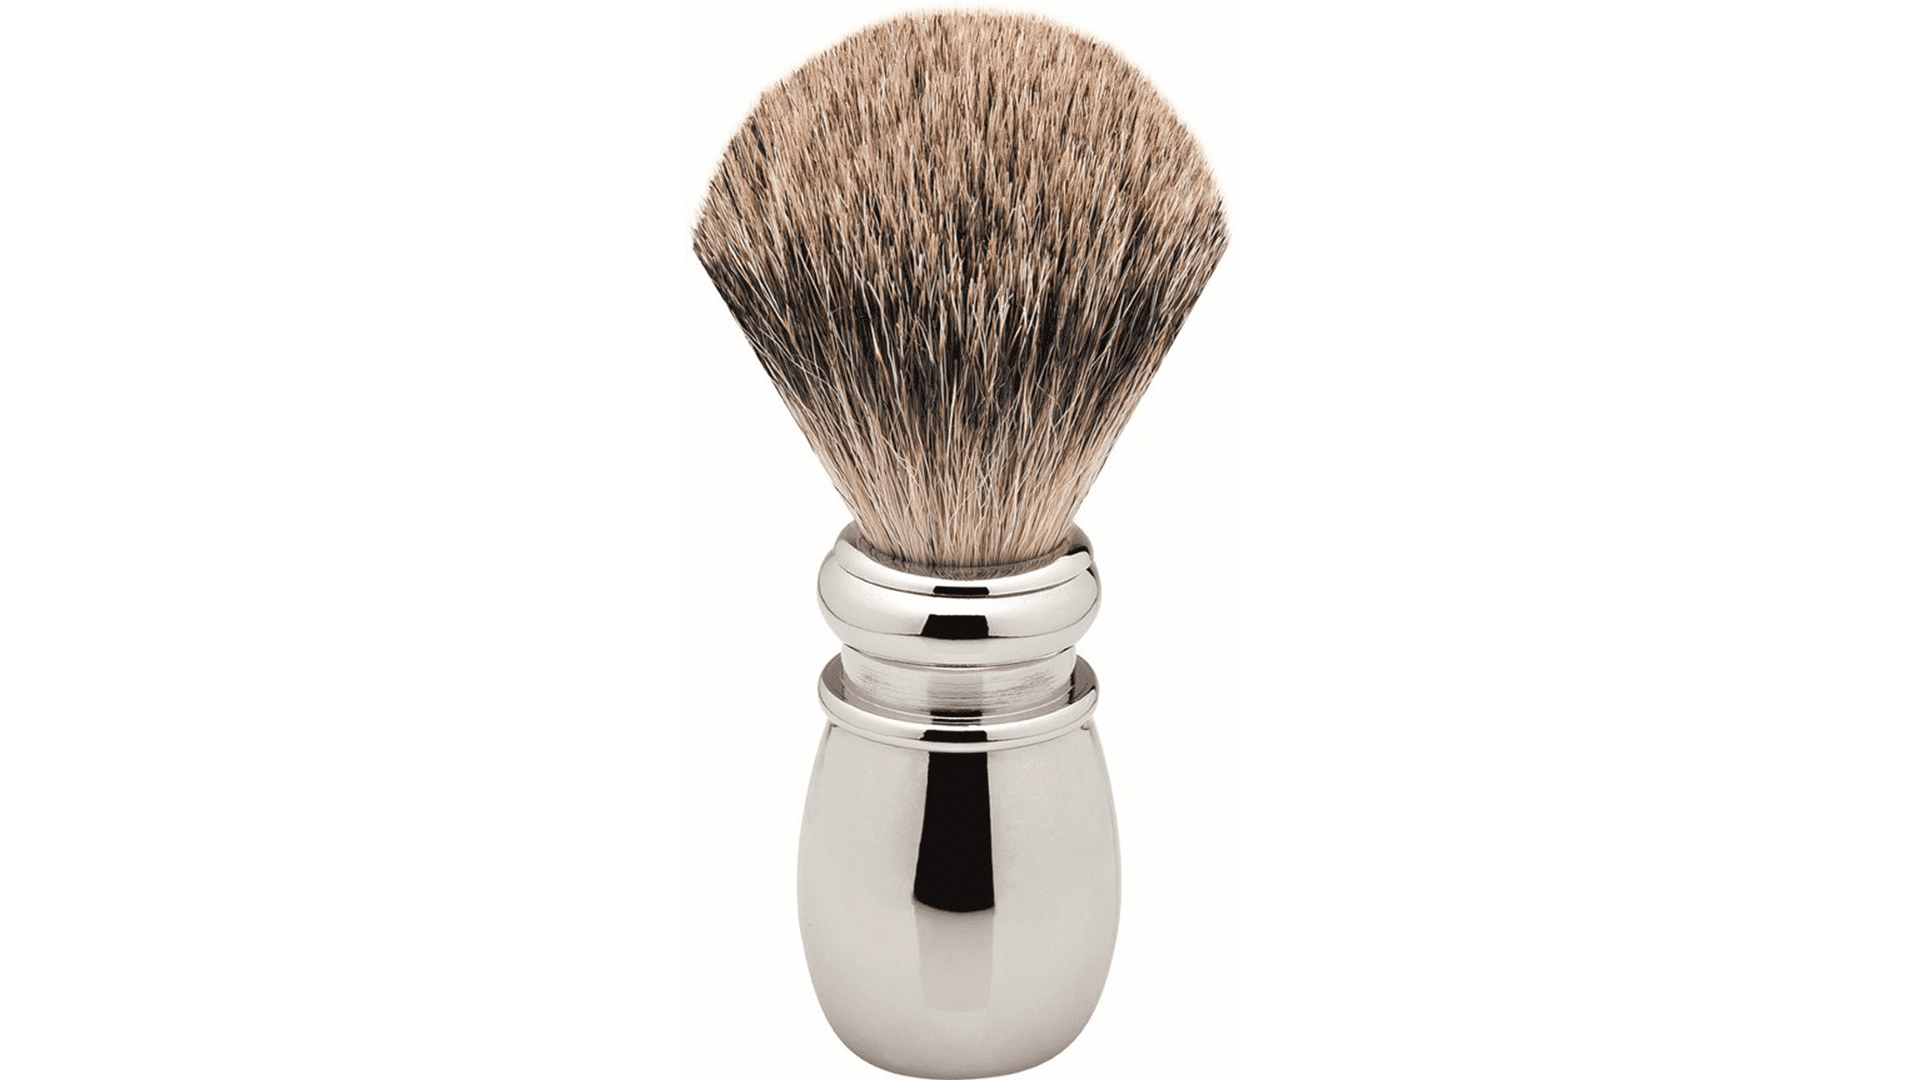 heritage-shaving-brush-badger-hair-metal-shiny-refined-size-m-from-solingen